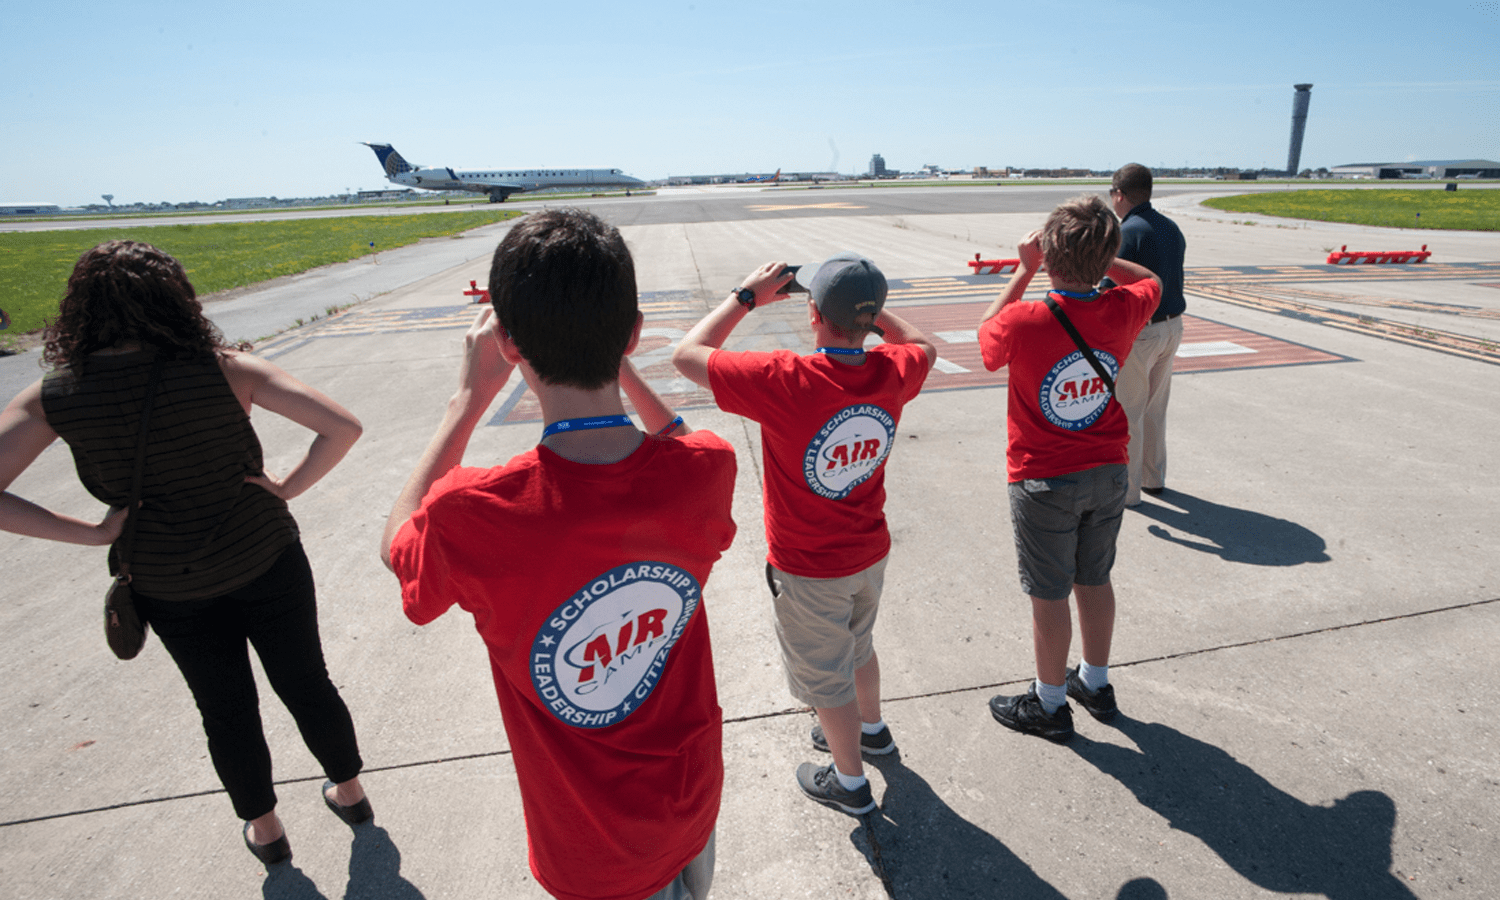 Students view an aircraft at Dayton International Airport in Dayton, Ohio